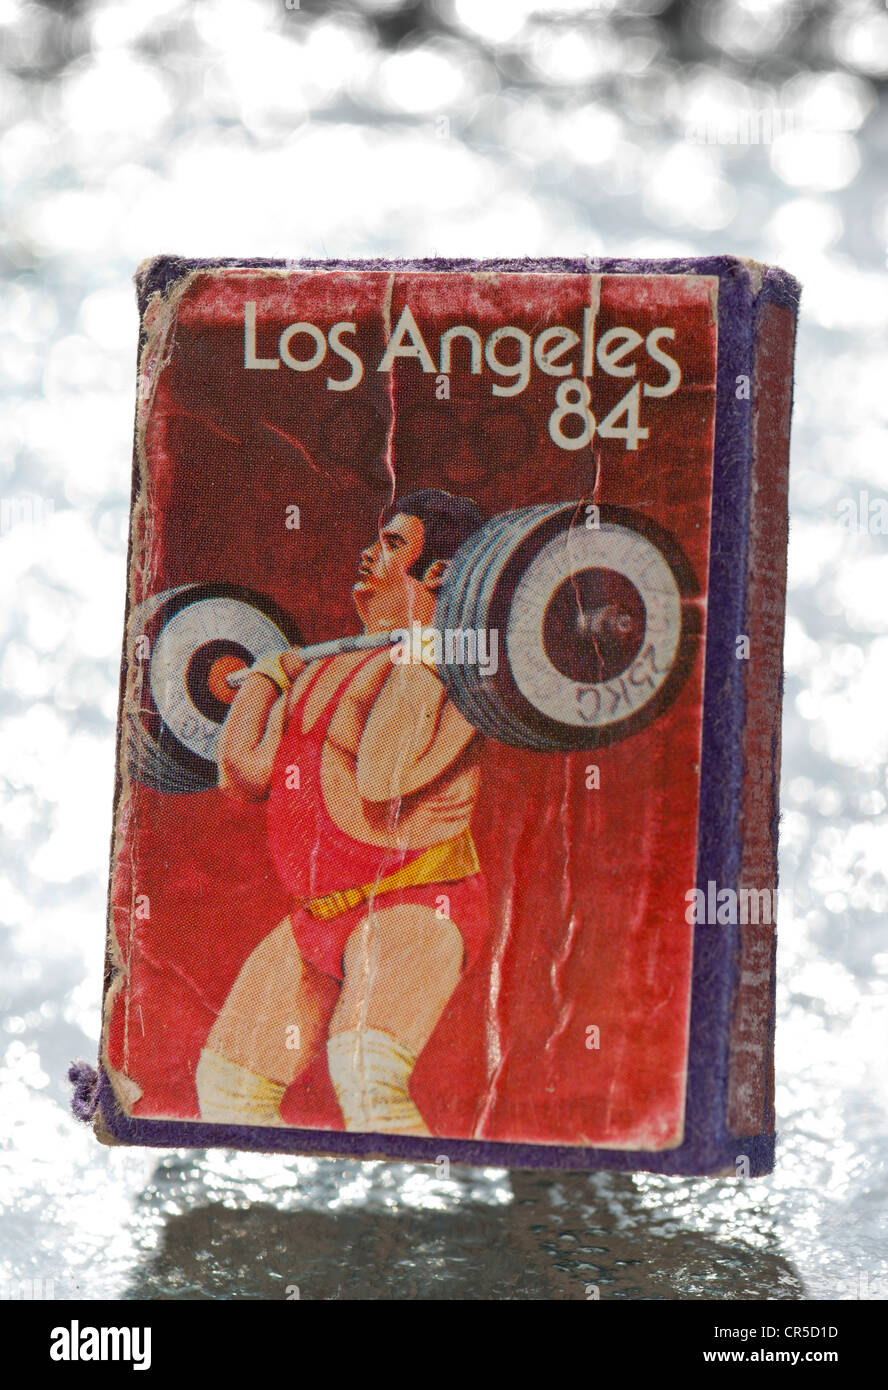 Matchbox dalle Olimpiadi di Los Angeles, 1984. Foto Stock